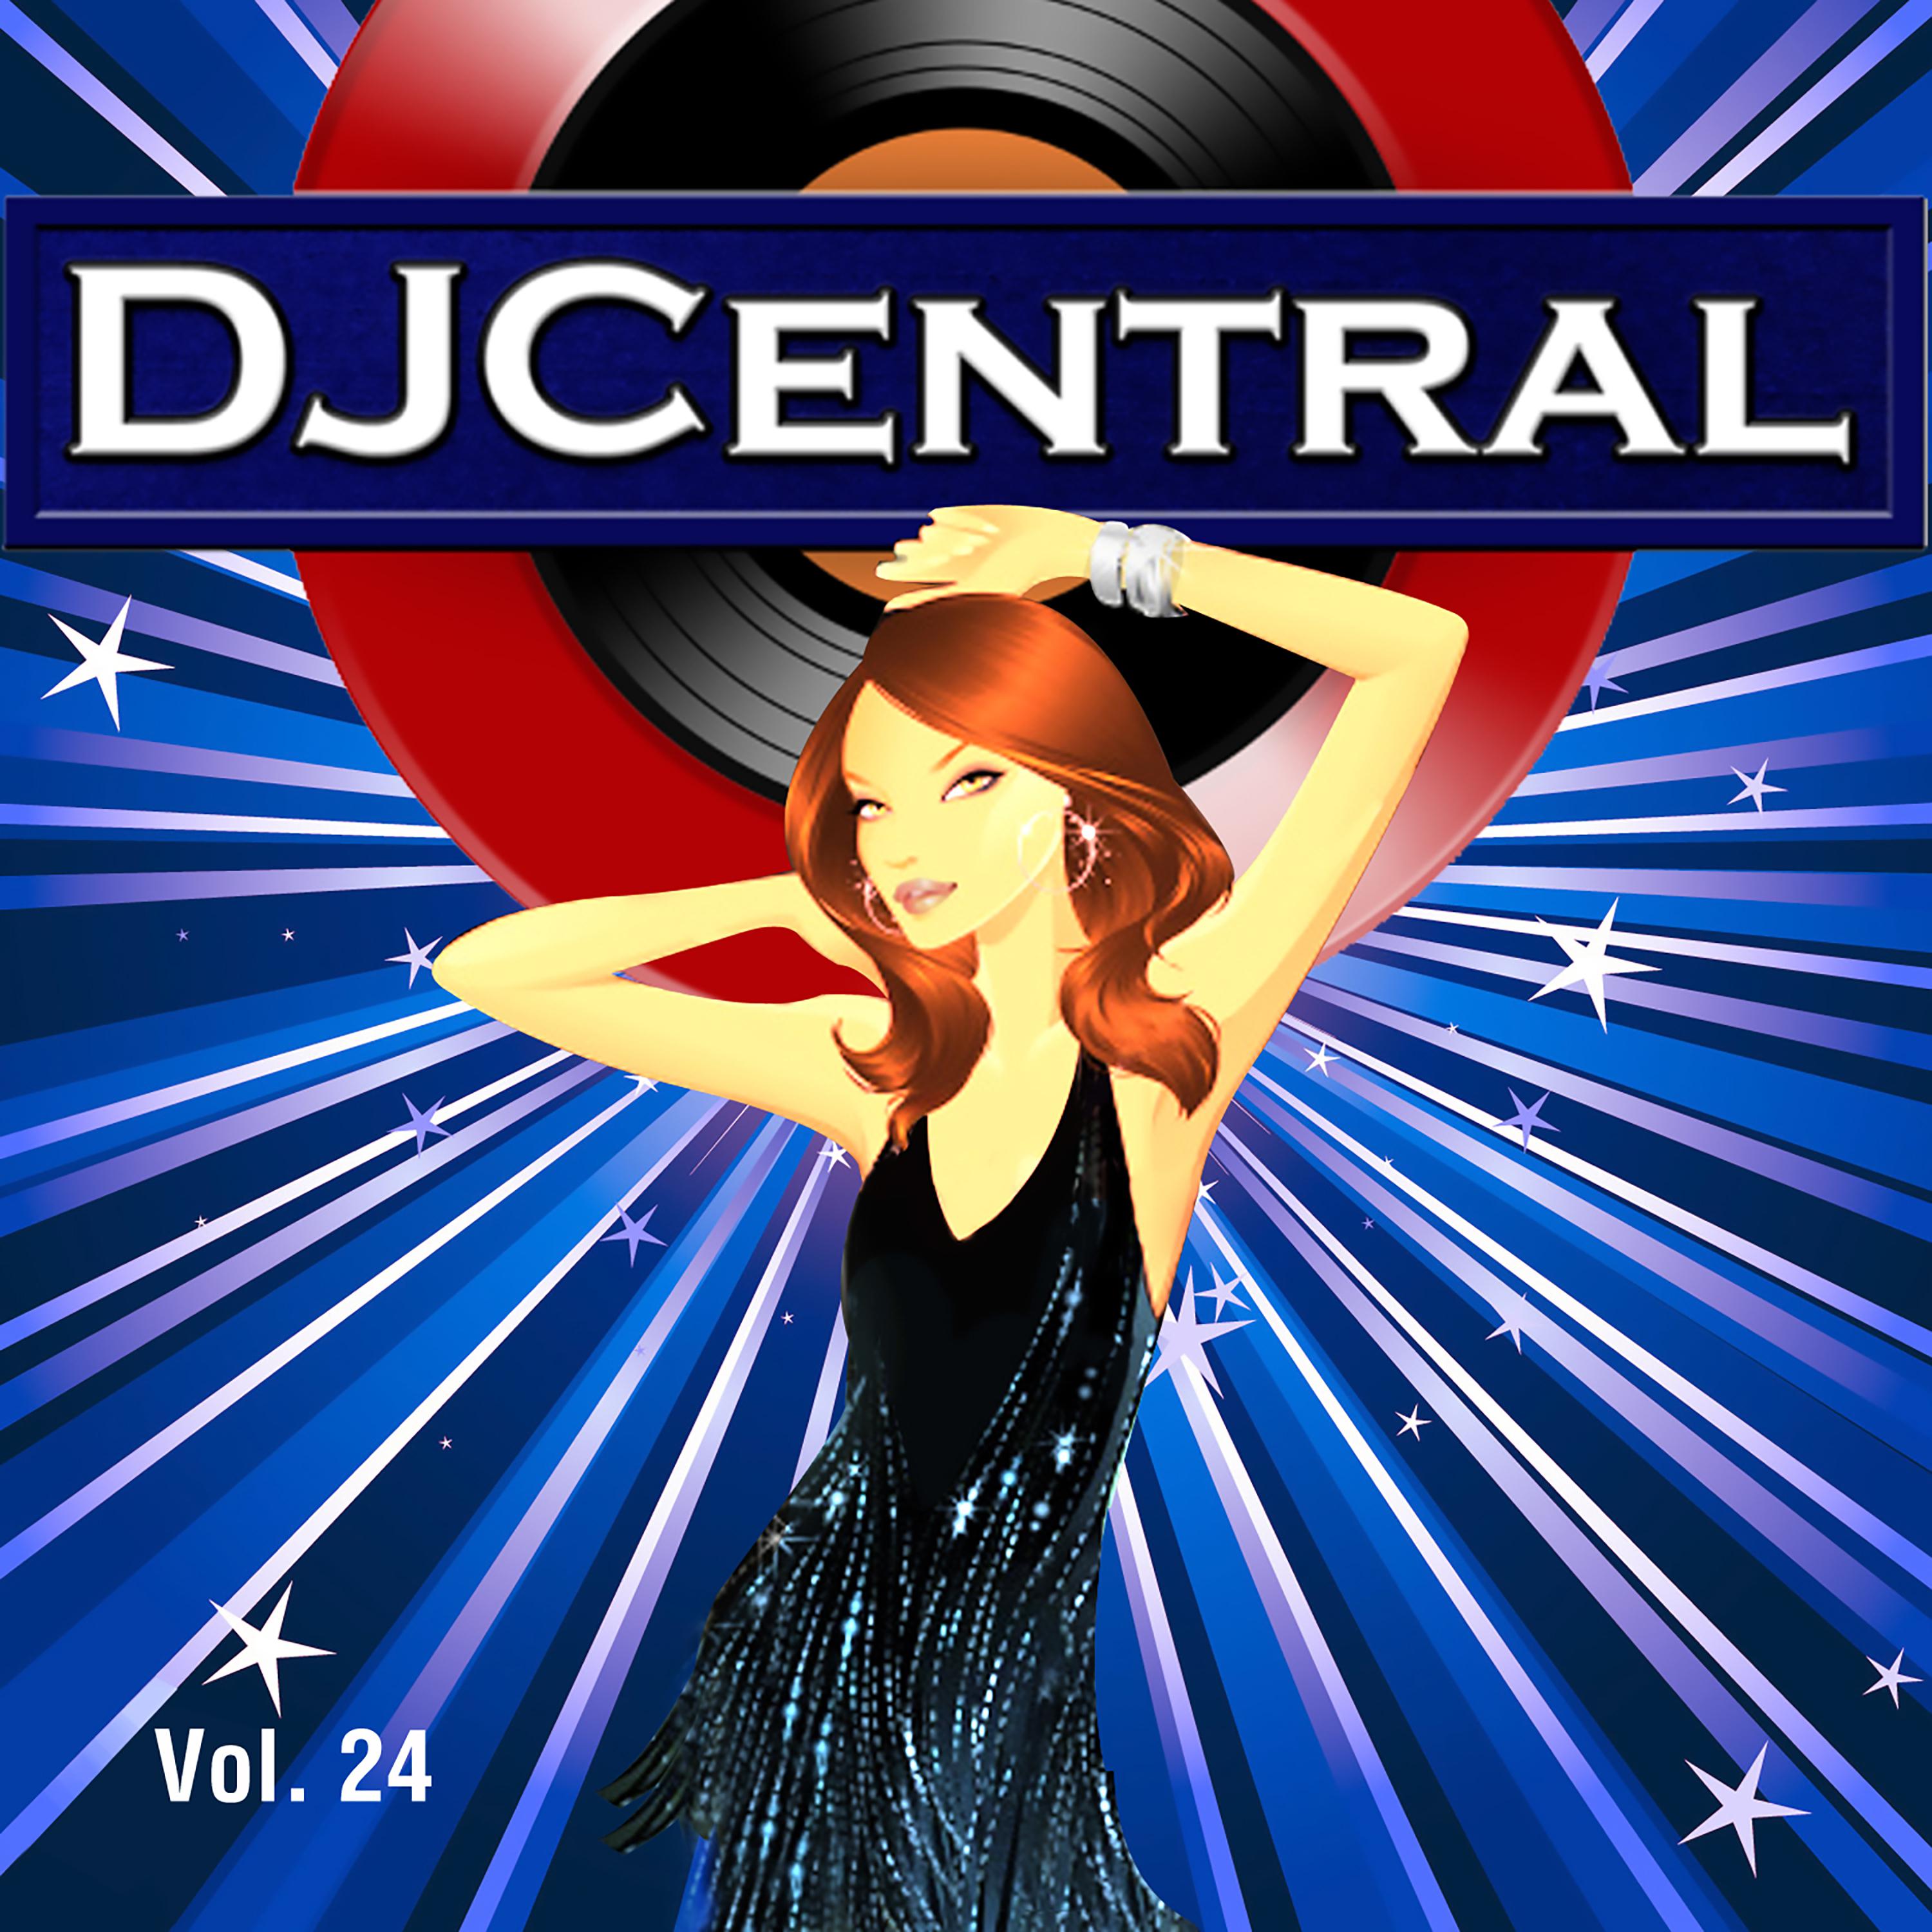 DJ Central Vol, 24